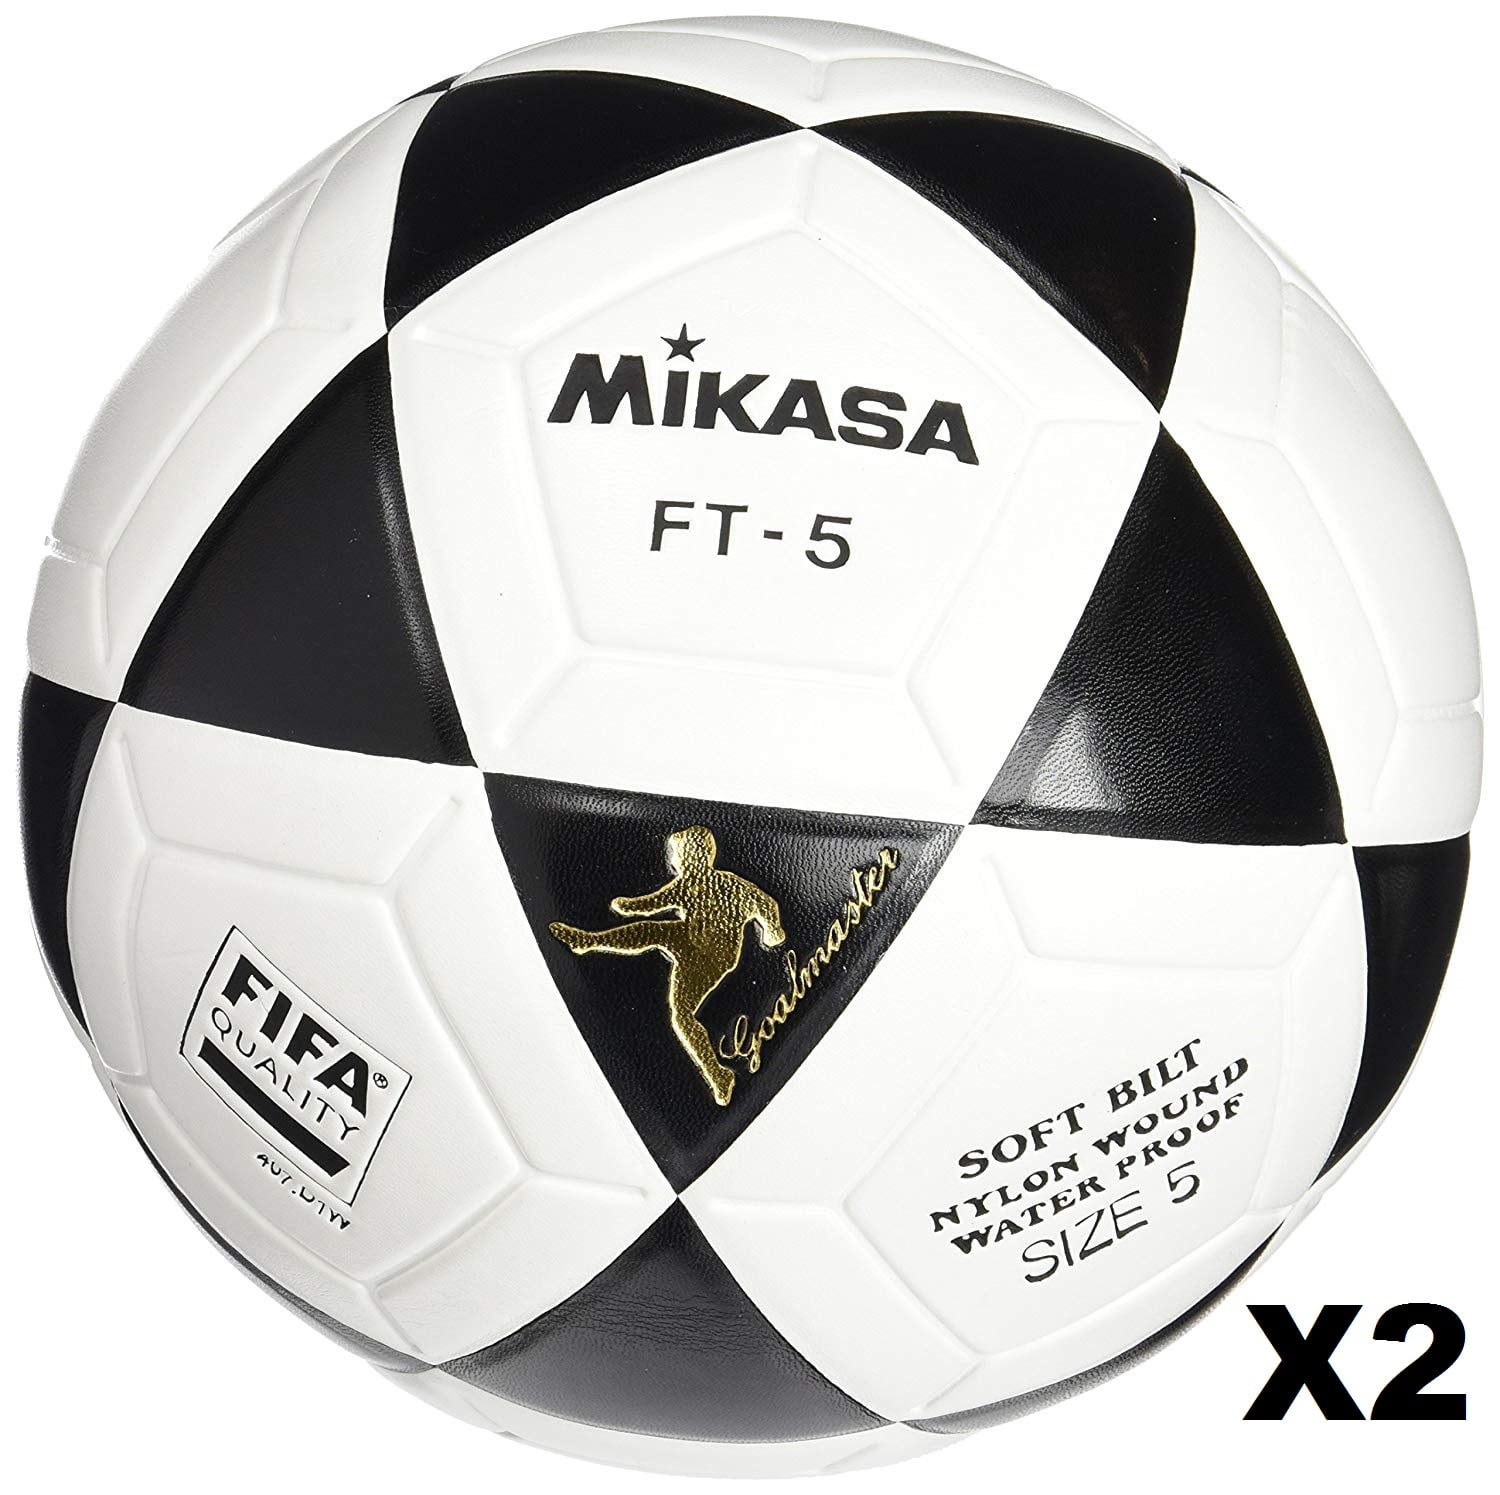 Mikasa FT5 Goal Master Soccer Ball Size 5 Orange/Blue Official Footvolley Ball